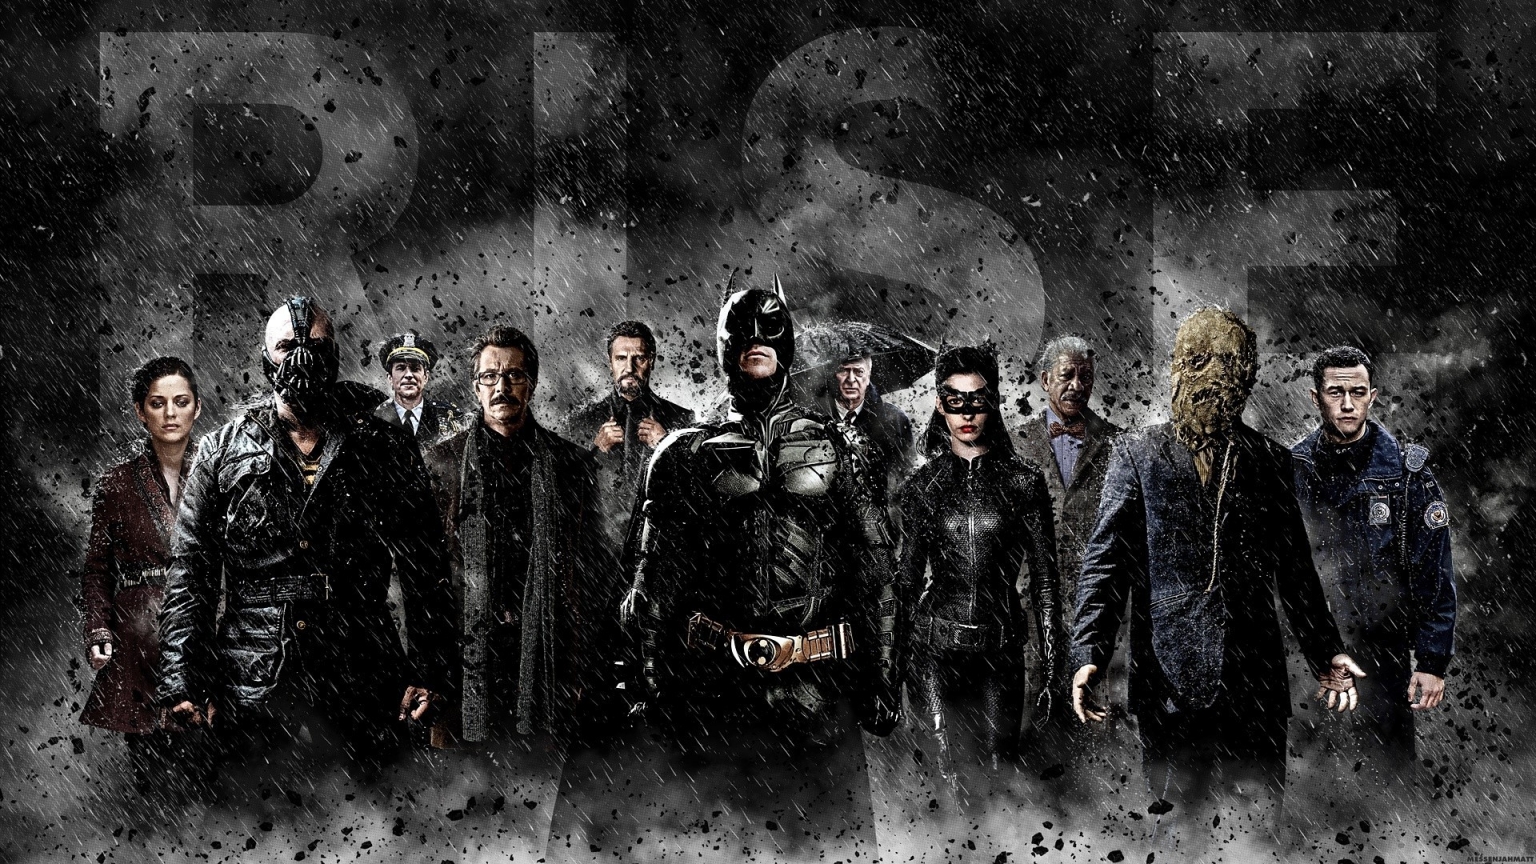 The Dark Knight Rises Cast for 1536 x 864 HDTV resolution